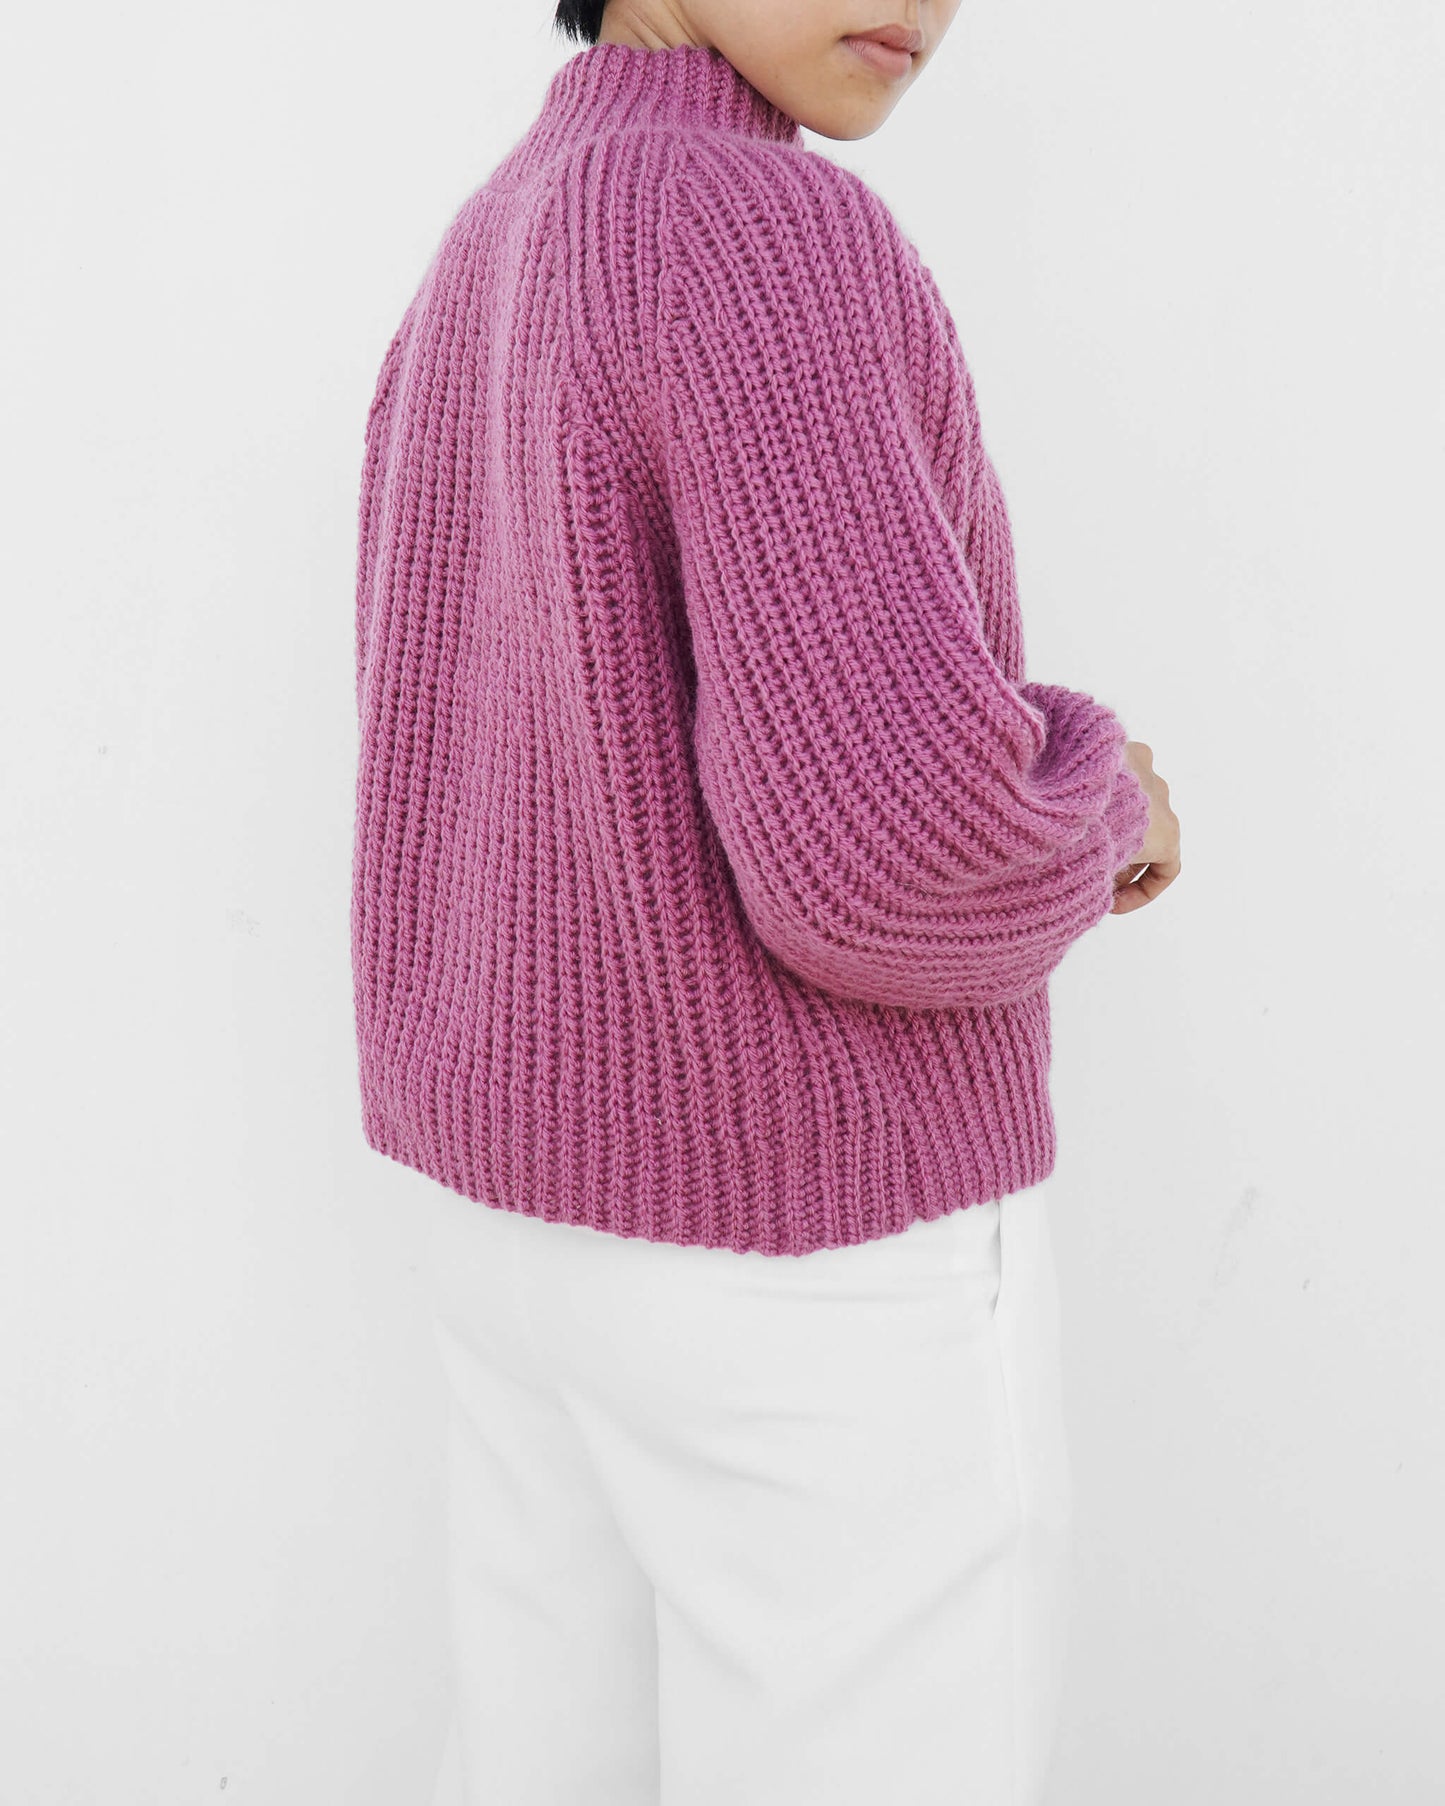 Sweater No.35 | Ribbed sweater crochet pattern